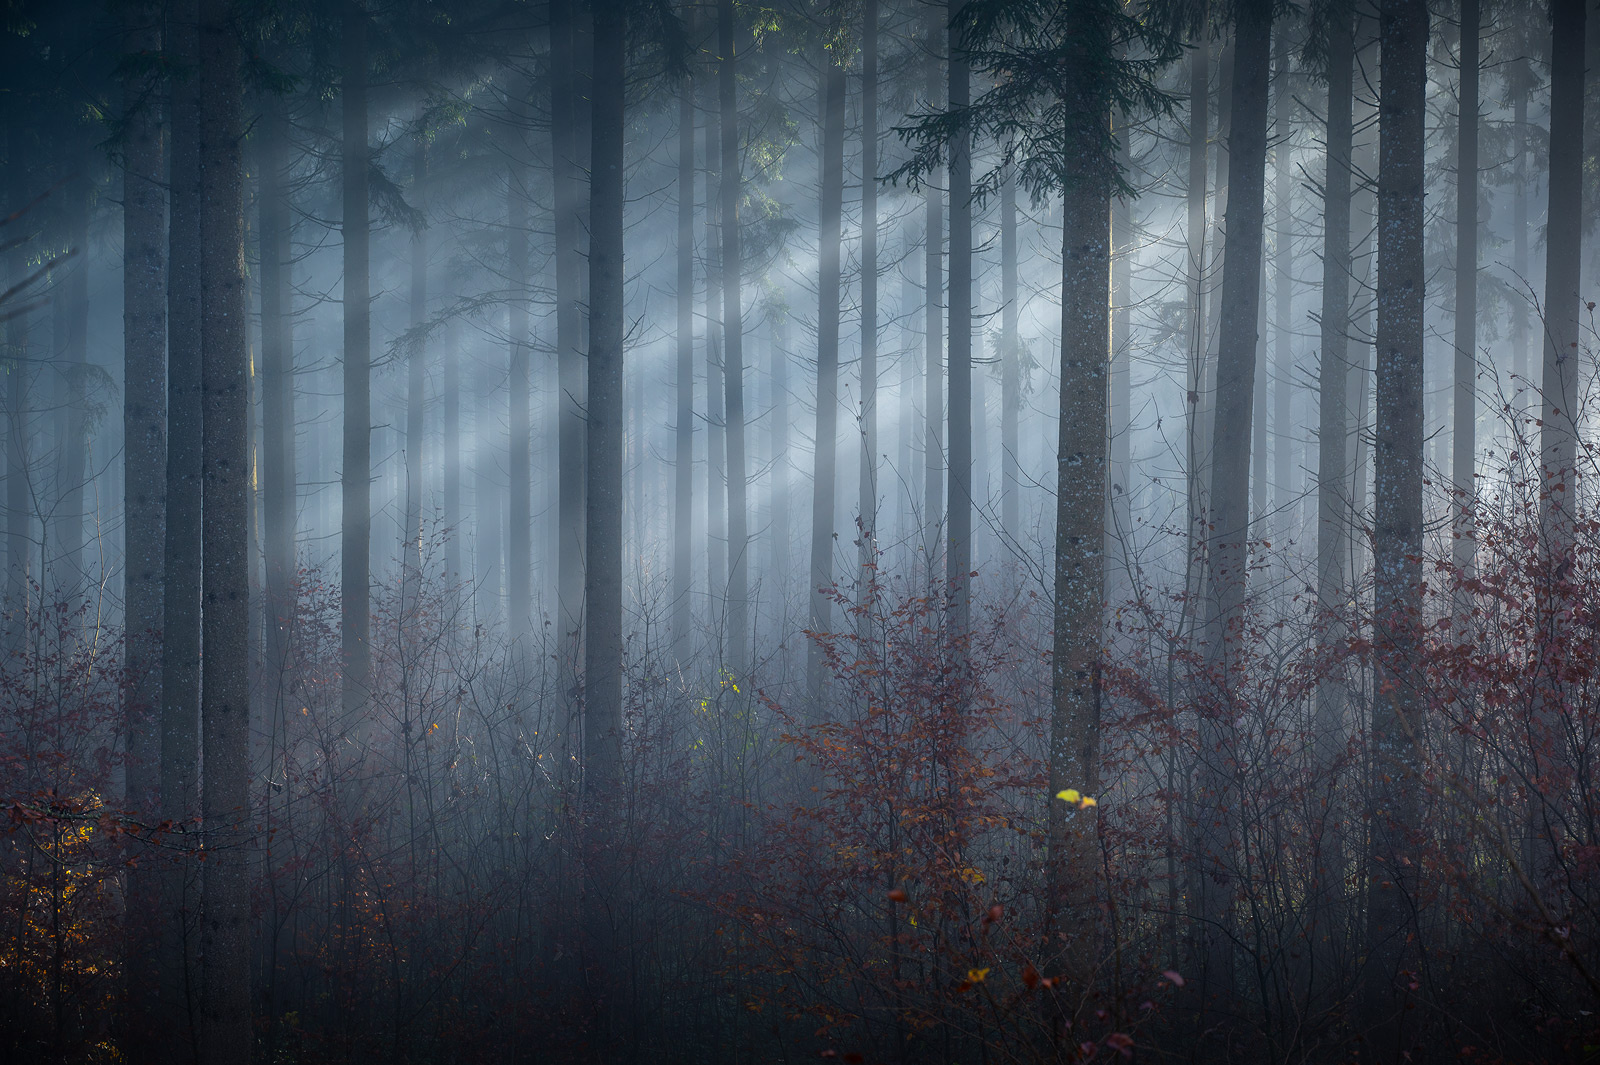 Foggy mood fog forest tree trees туман лес деревья дерево